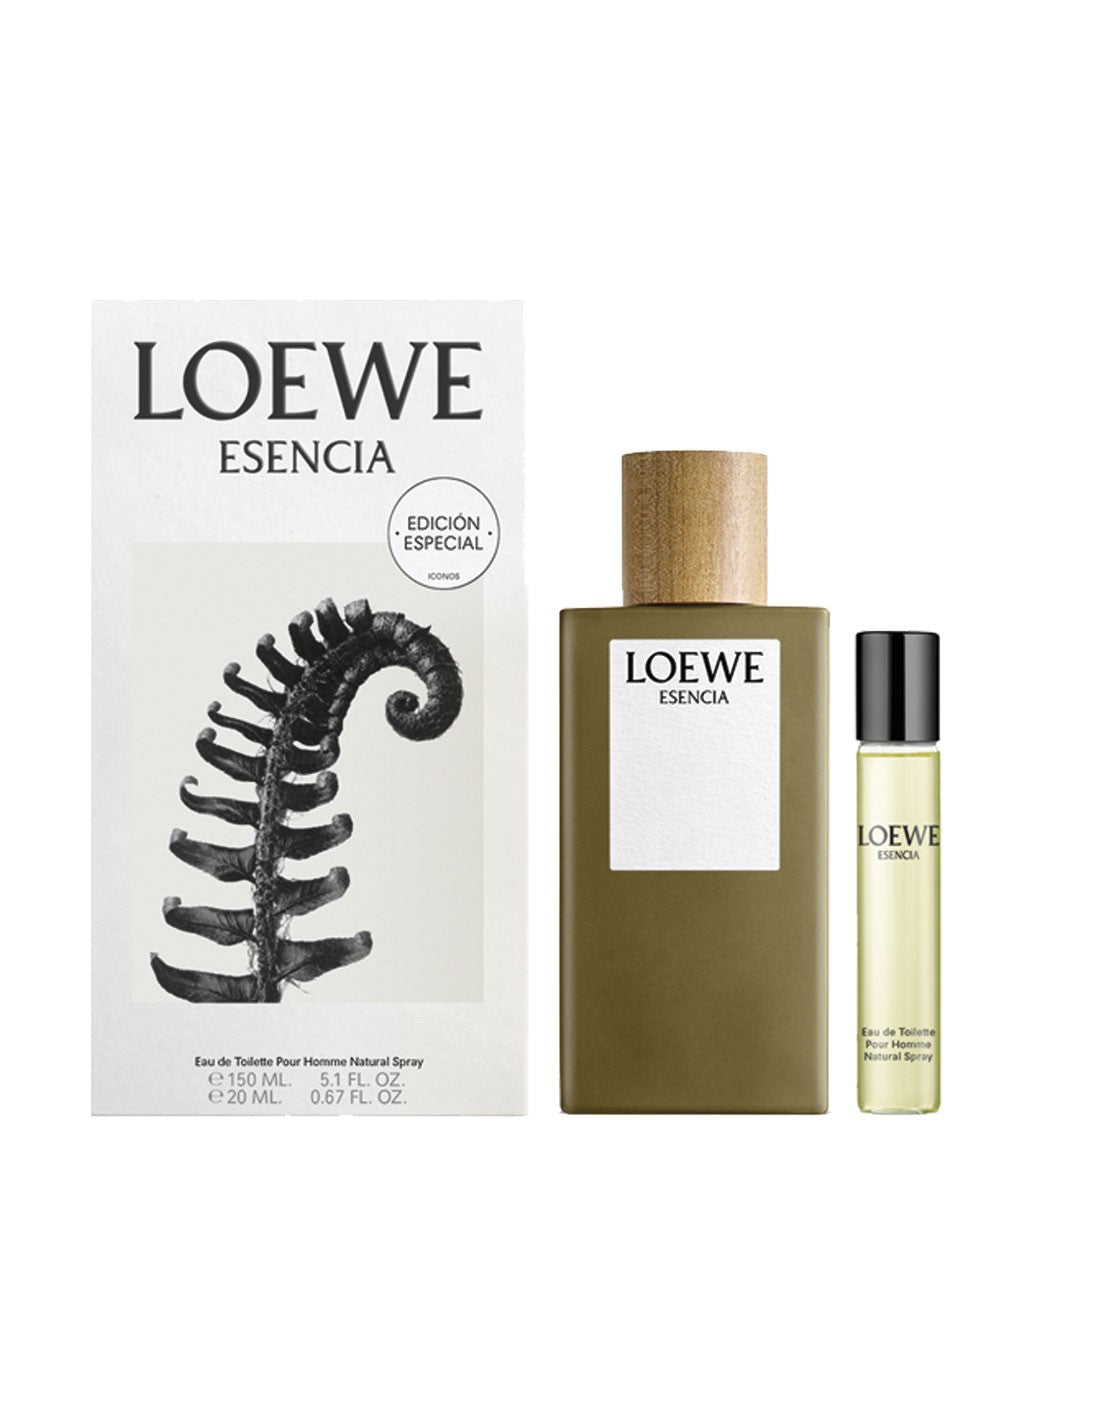 Loewe Esencia Homme et 150 Vap, 20 мл, коробка